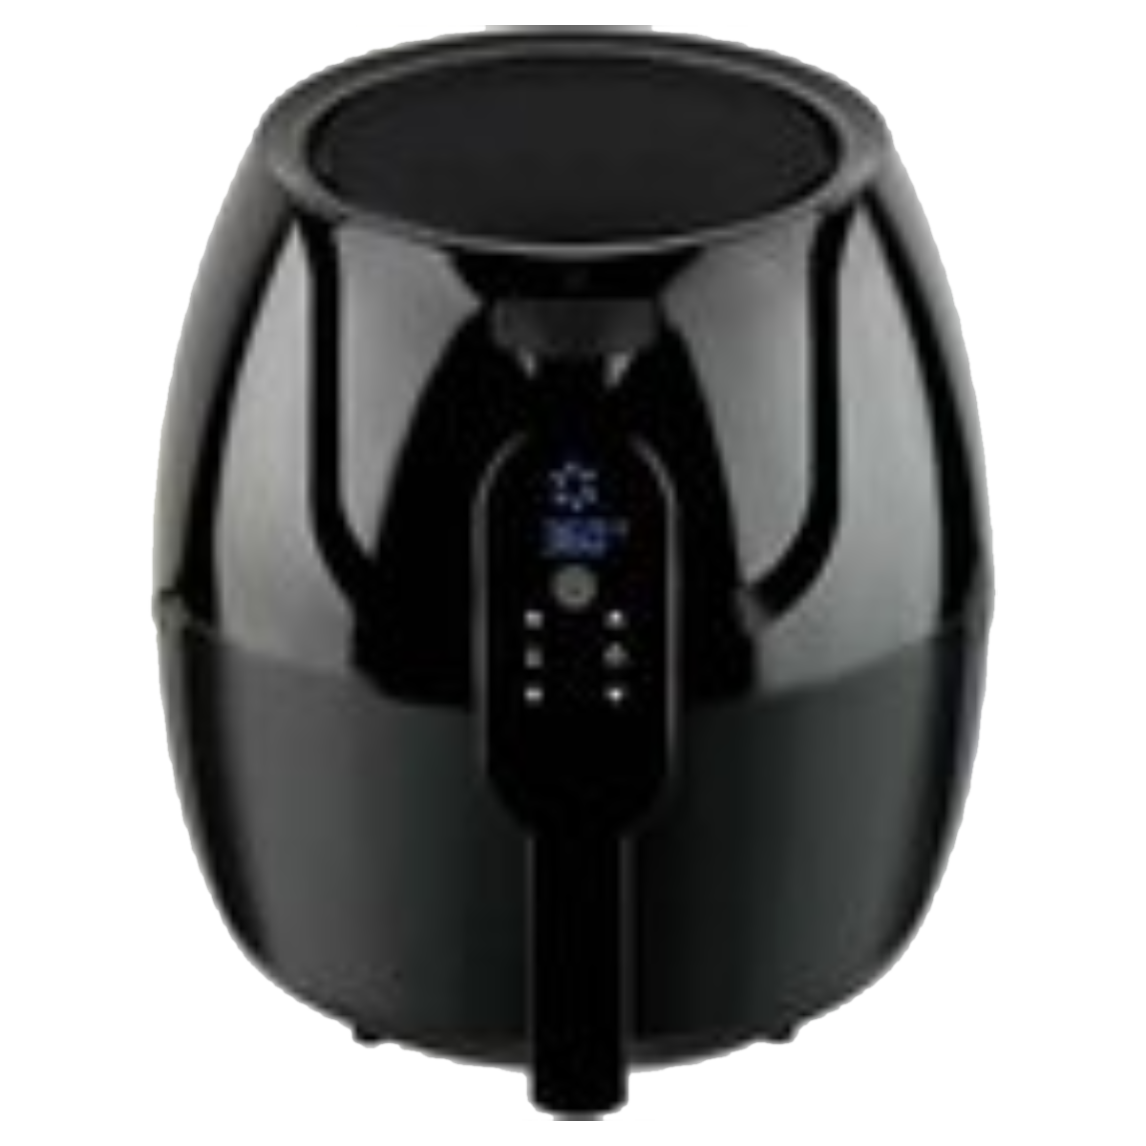 Premium - 5.8 Quart Push Button Air Fryer With Rapid Hot Air Circulating System - Black